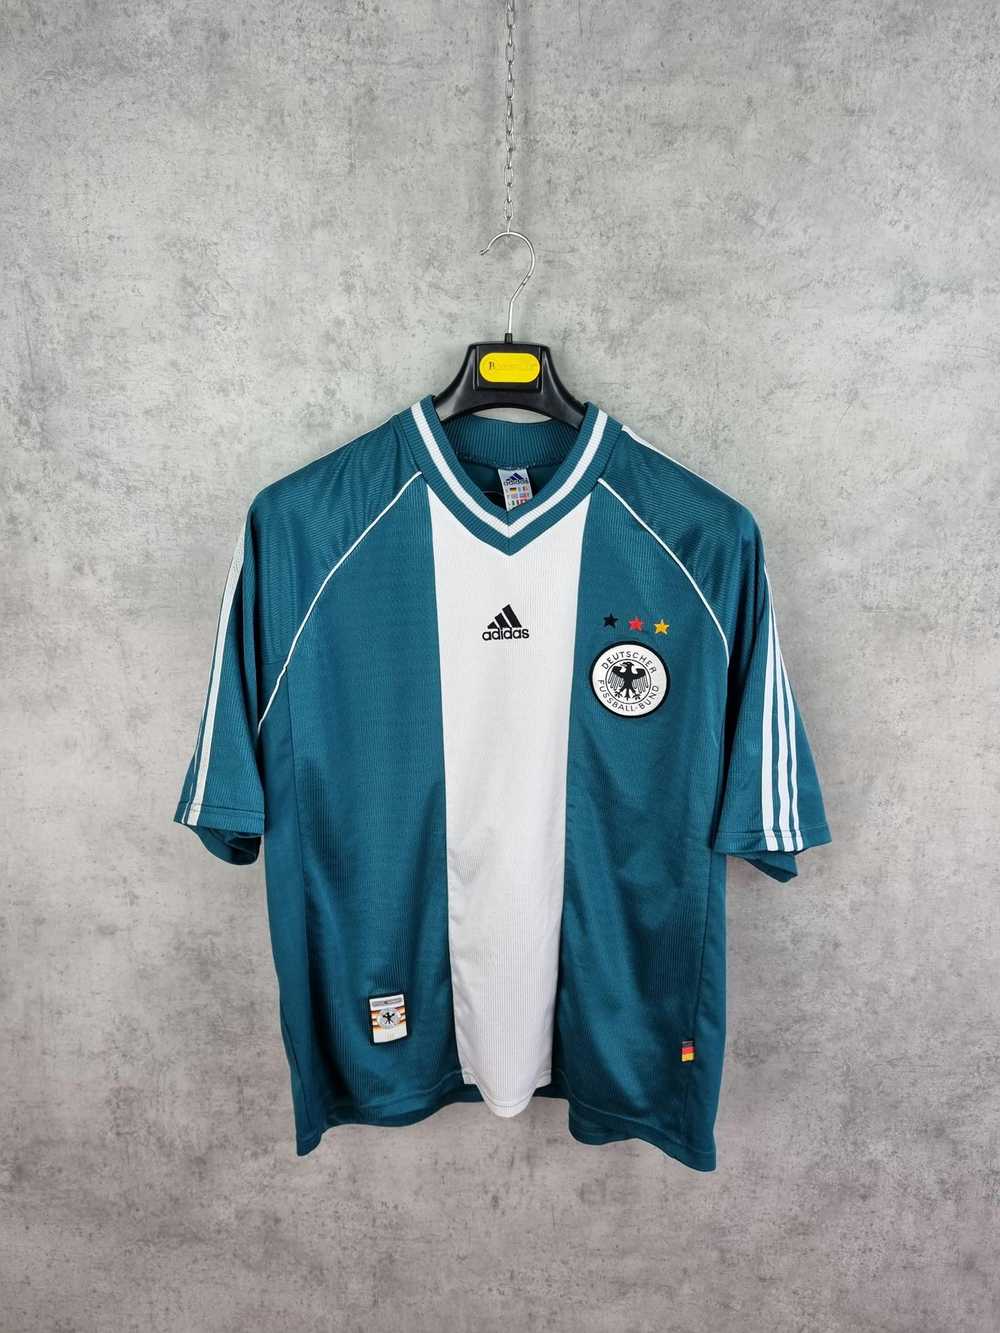 Adidas × Jersey × Soccer Jersey 90s ADIDAS Vintag… - image 1